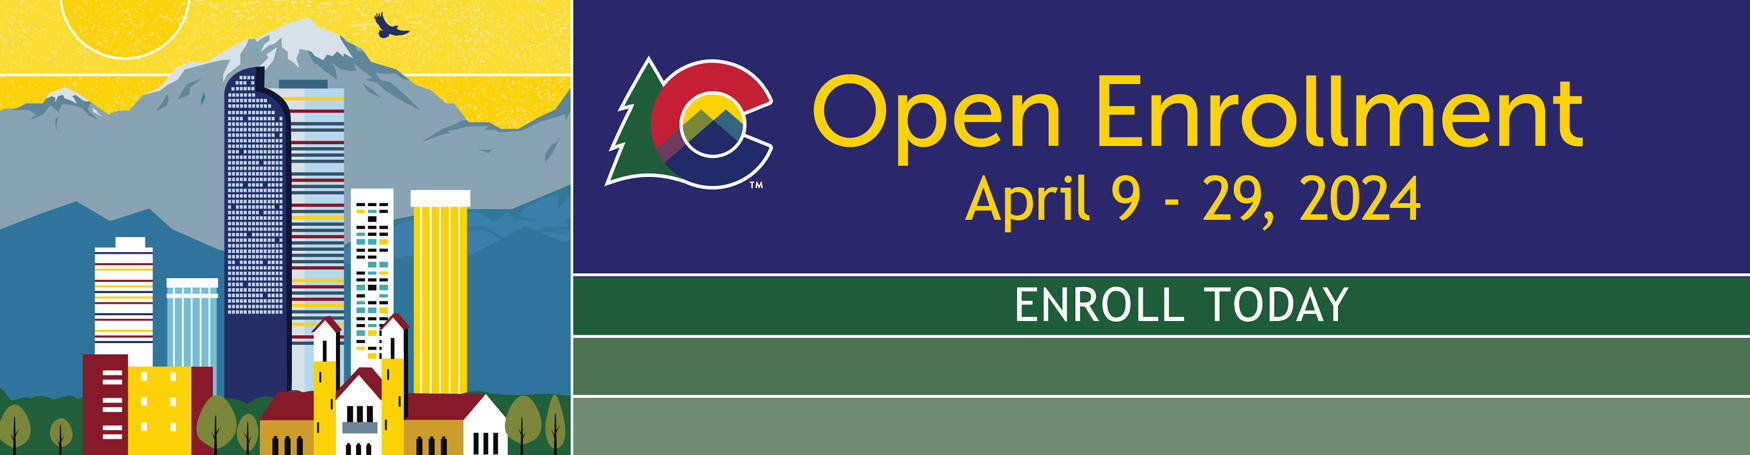 Clickable web banner for open enrollment for FY 2024-25